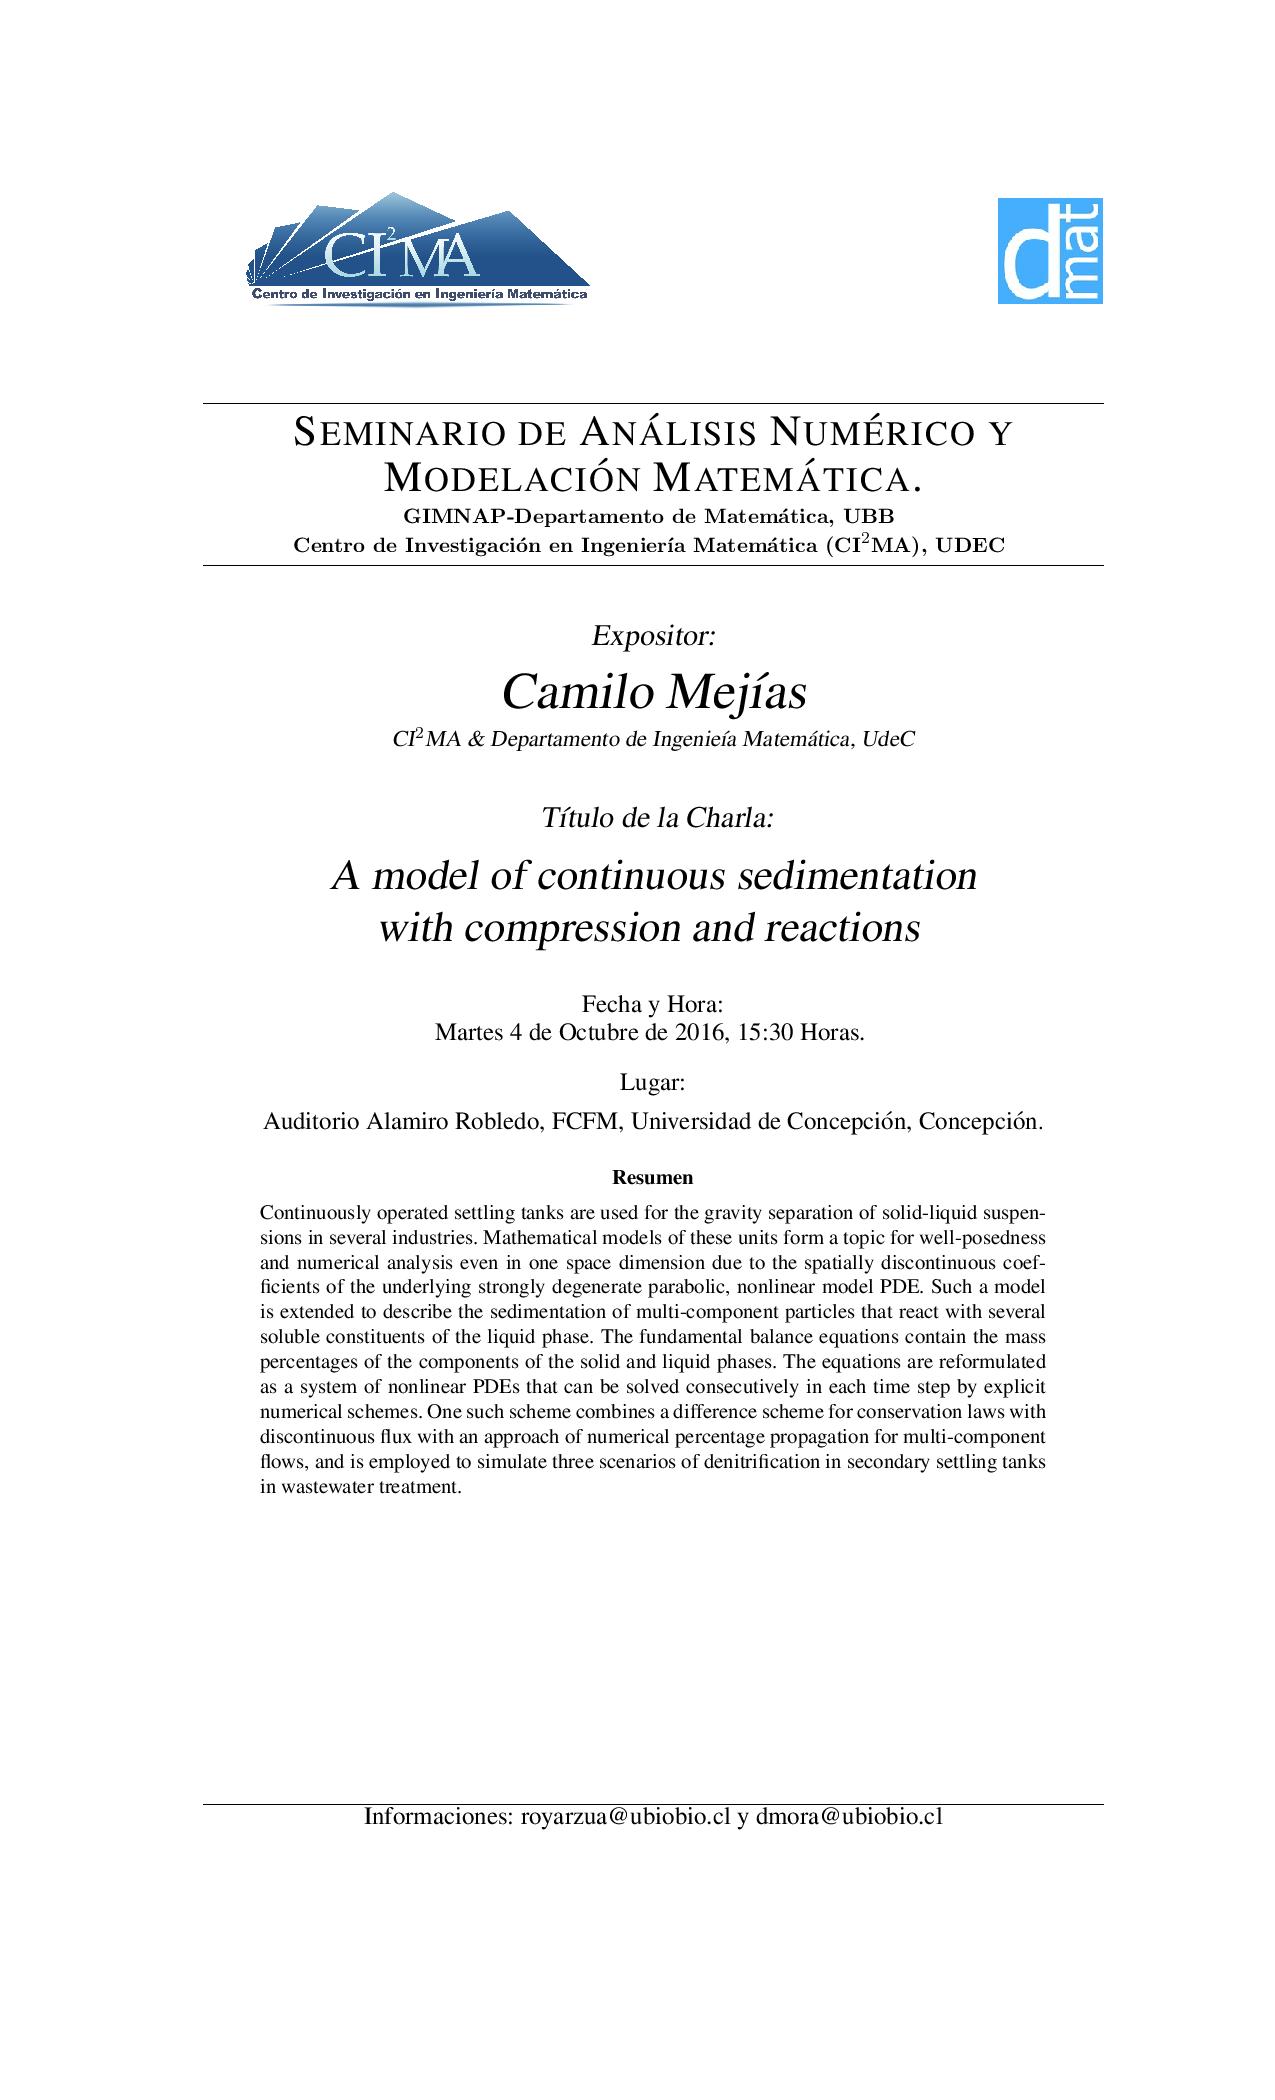 abstract-camilo-mejias-4-10-2016-page-001